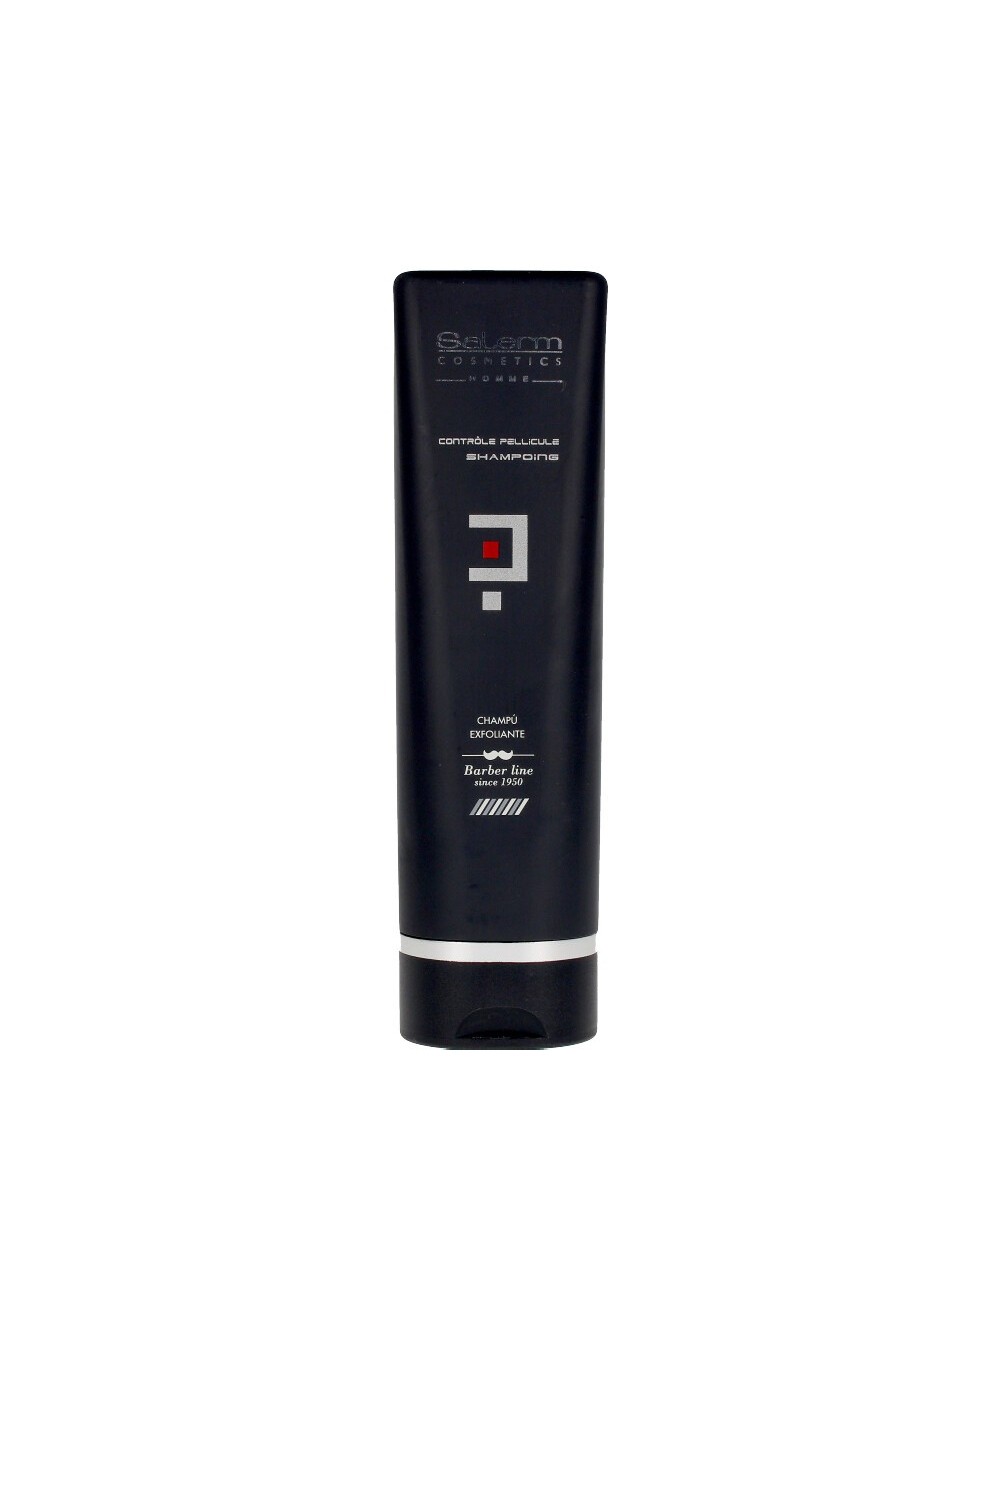 Salerm Cosmetics Homme Controle Exfoliant Anti-Dandruff Shampoo 250ml